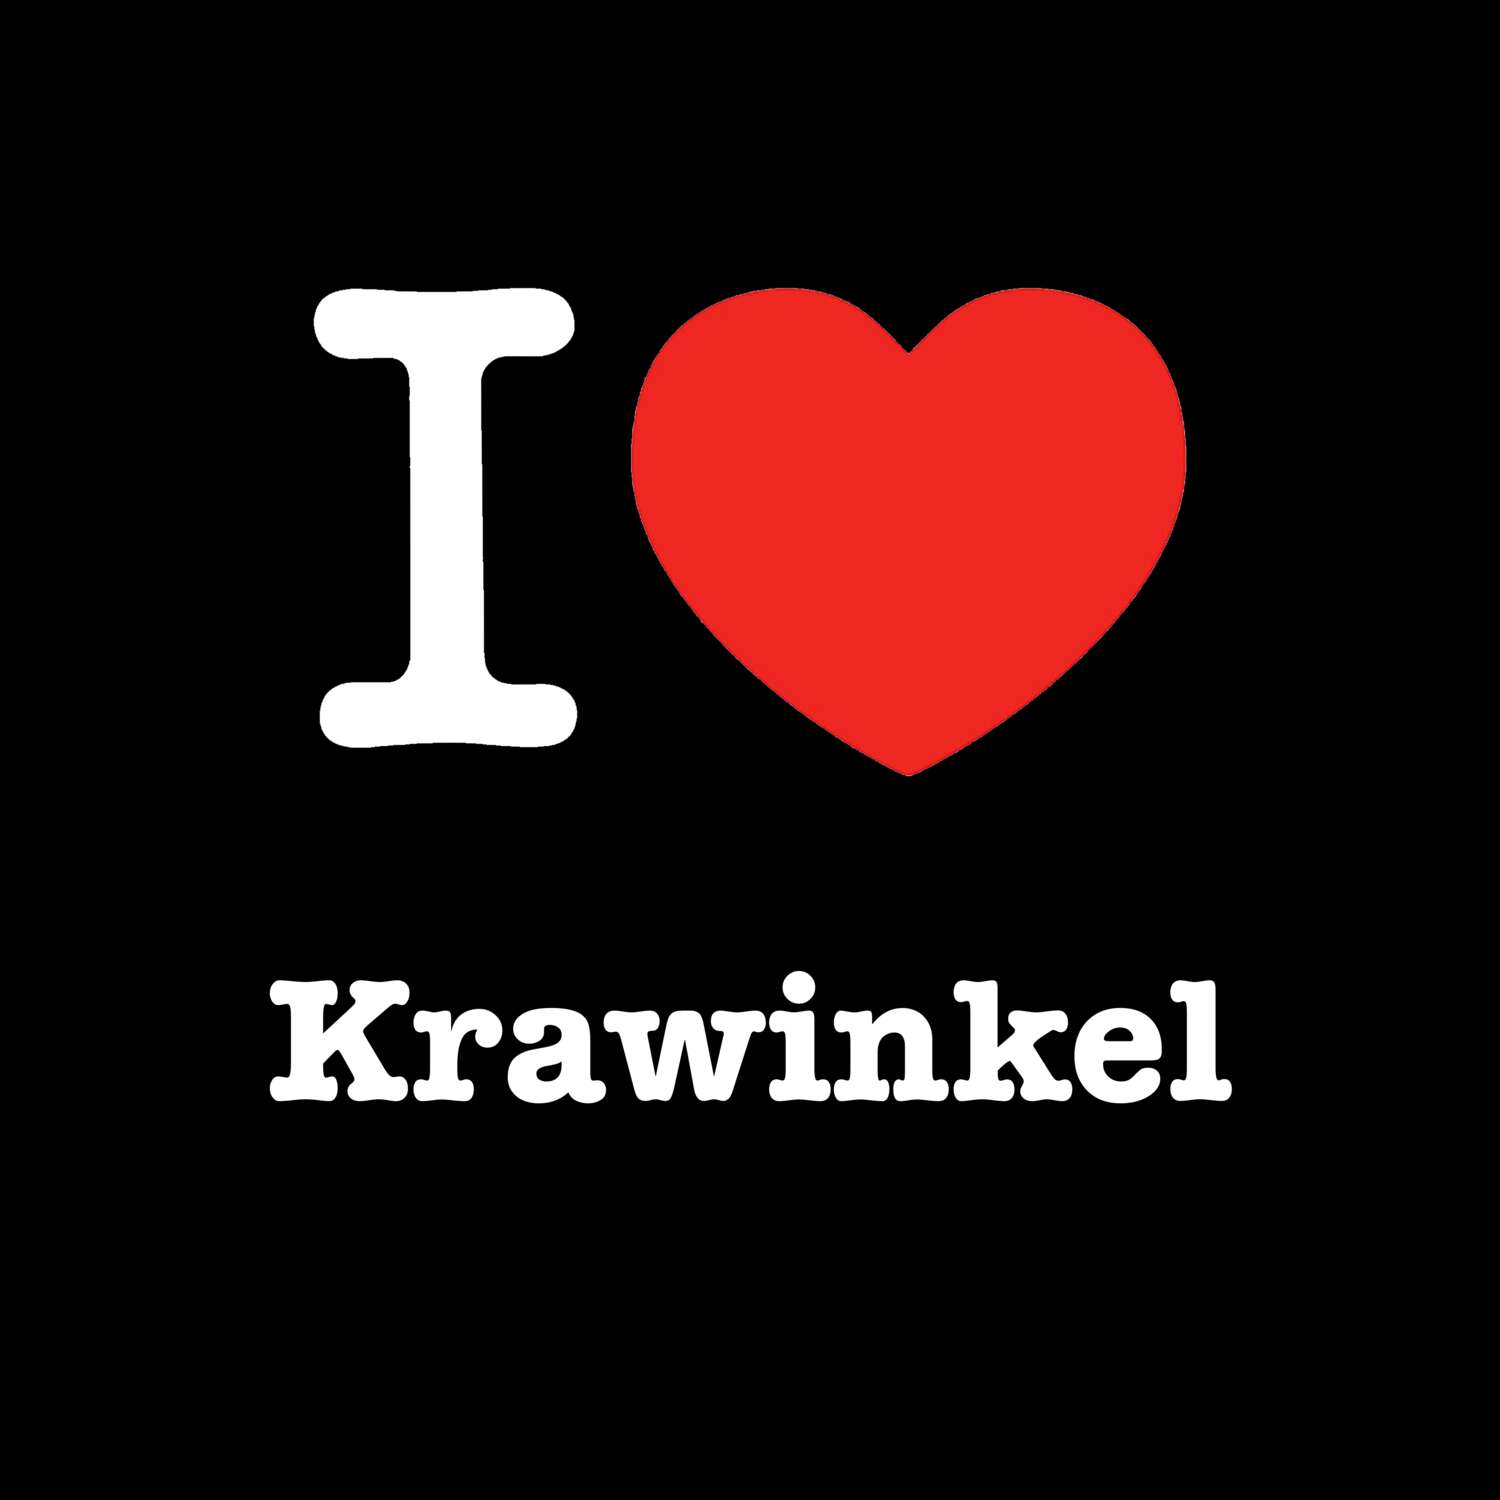 Krawinkel T-Shirt »I love«